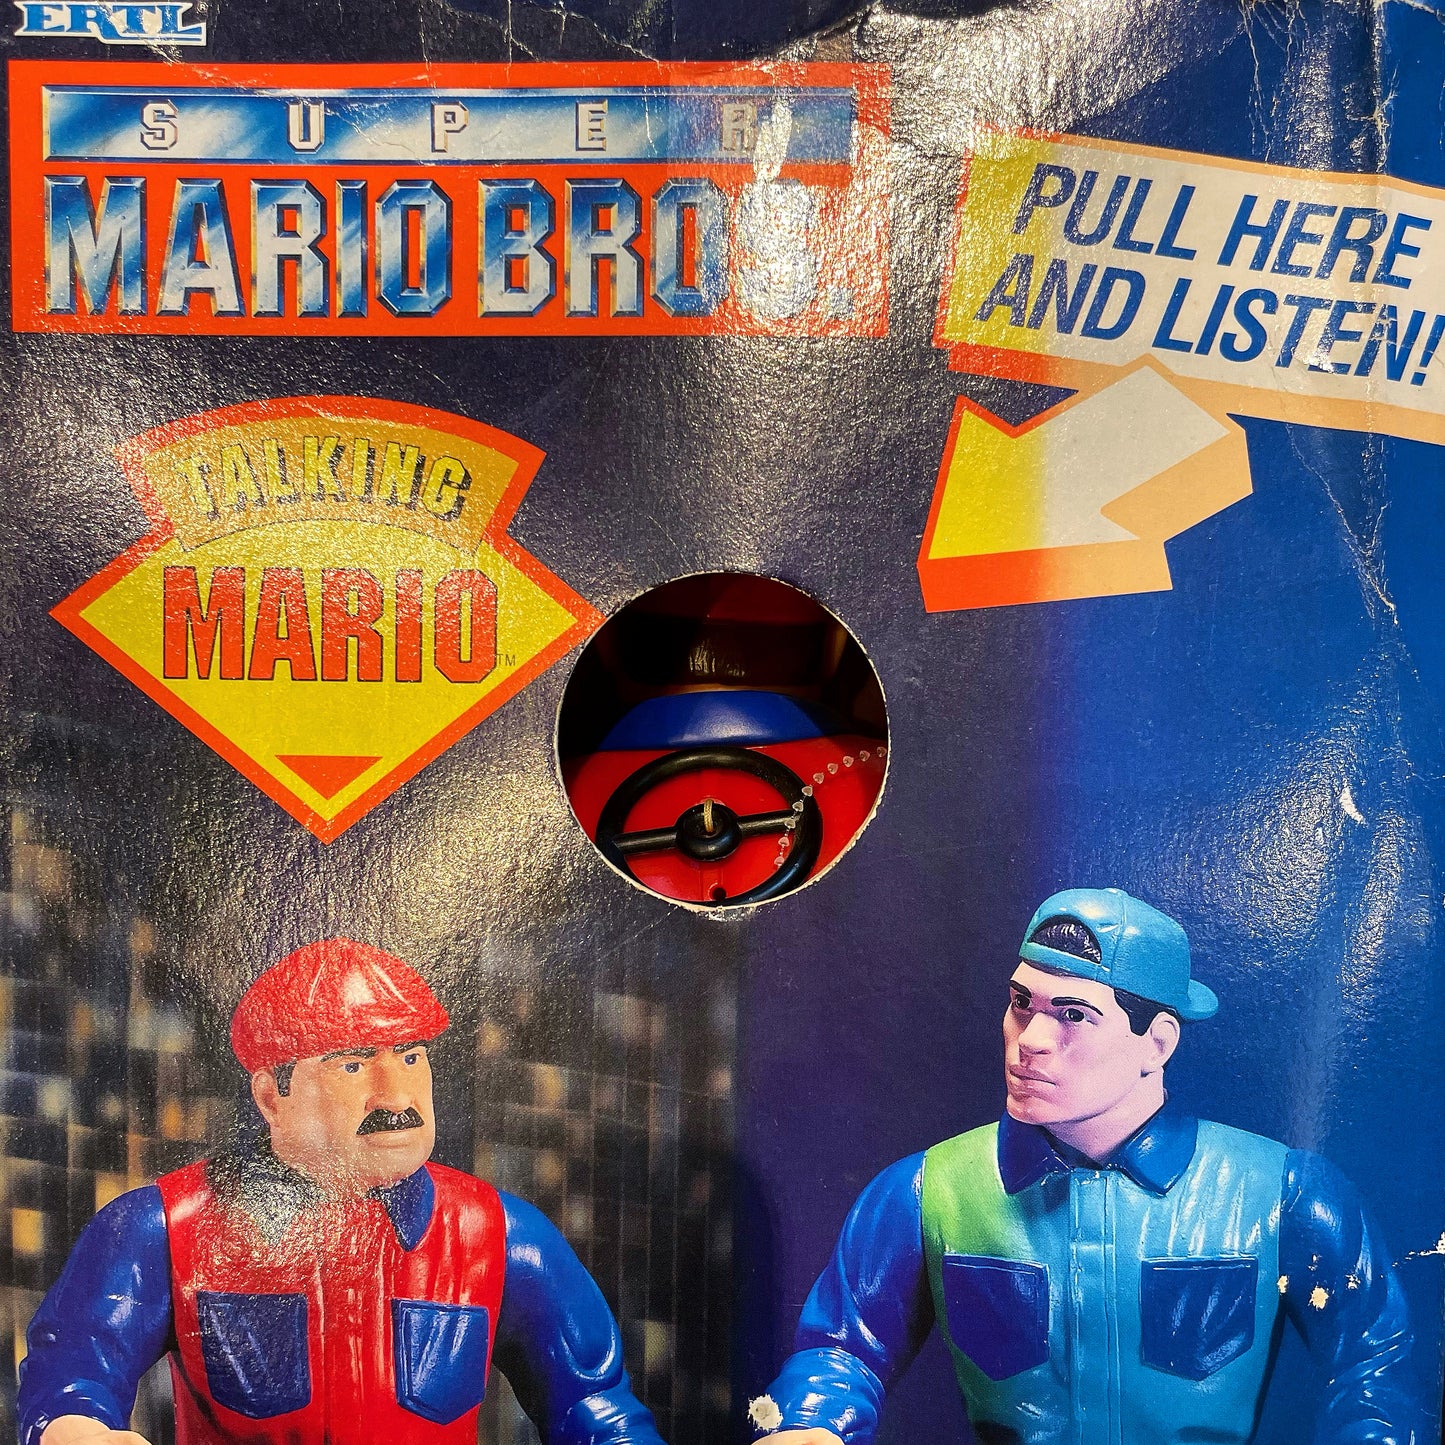 1993 ERTL SUPER MARIO BROS 映画 スーパーマリオ トーキングマリオ フィギュア TALKING MARIO ヴィンテージ